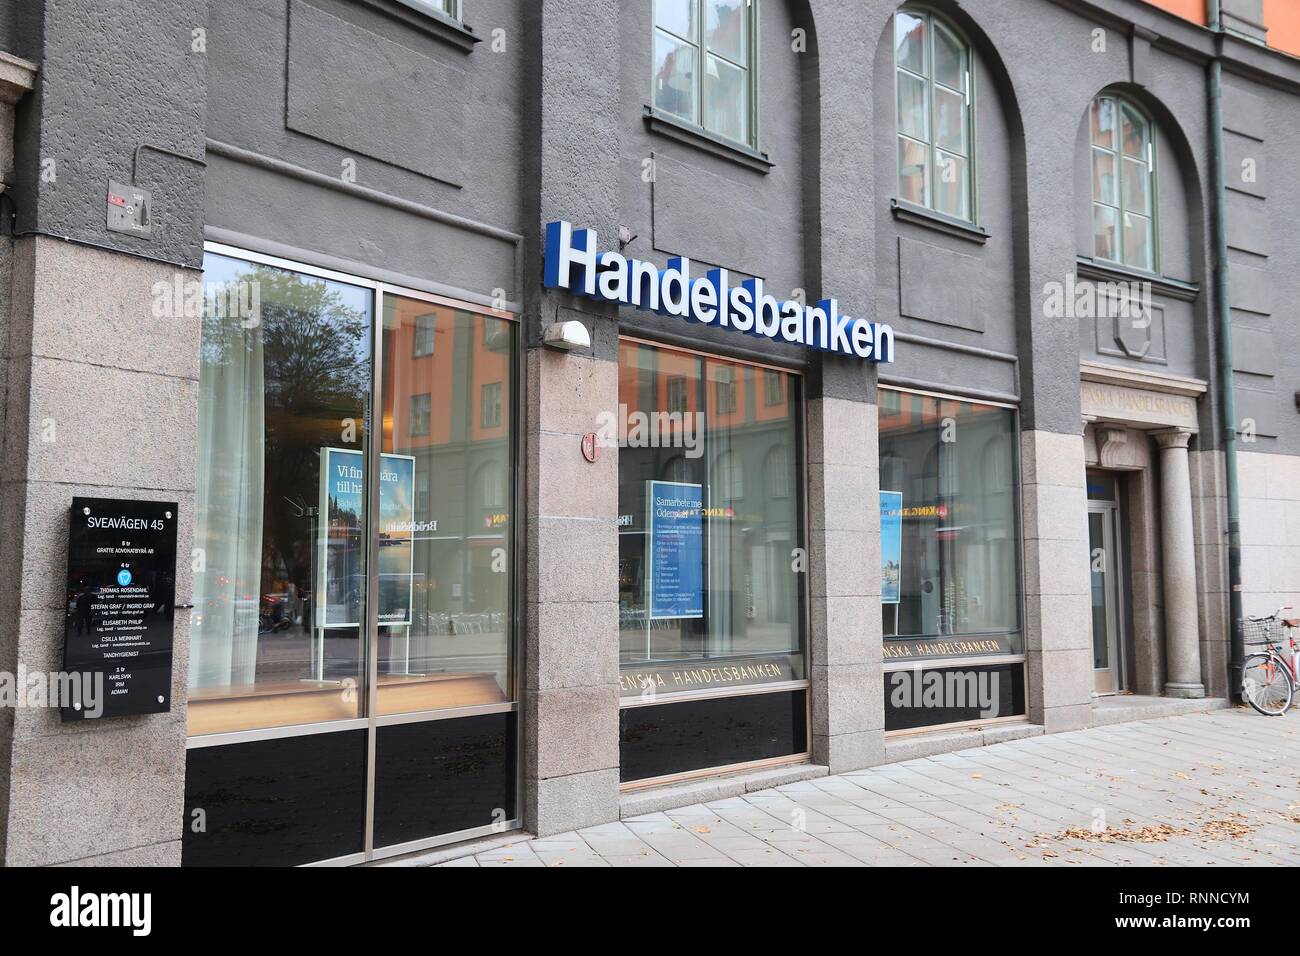 STOCKHOLM, SWEDEN - AUGUST 22, 2018: Handelsbanken bank branch in Stockholm, Sweden. It is one of largest banks in Sweden with 460 locations. Stock Photo